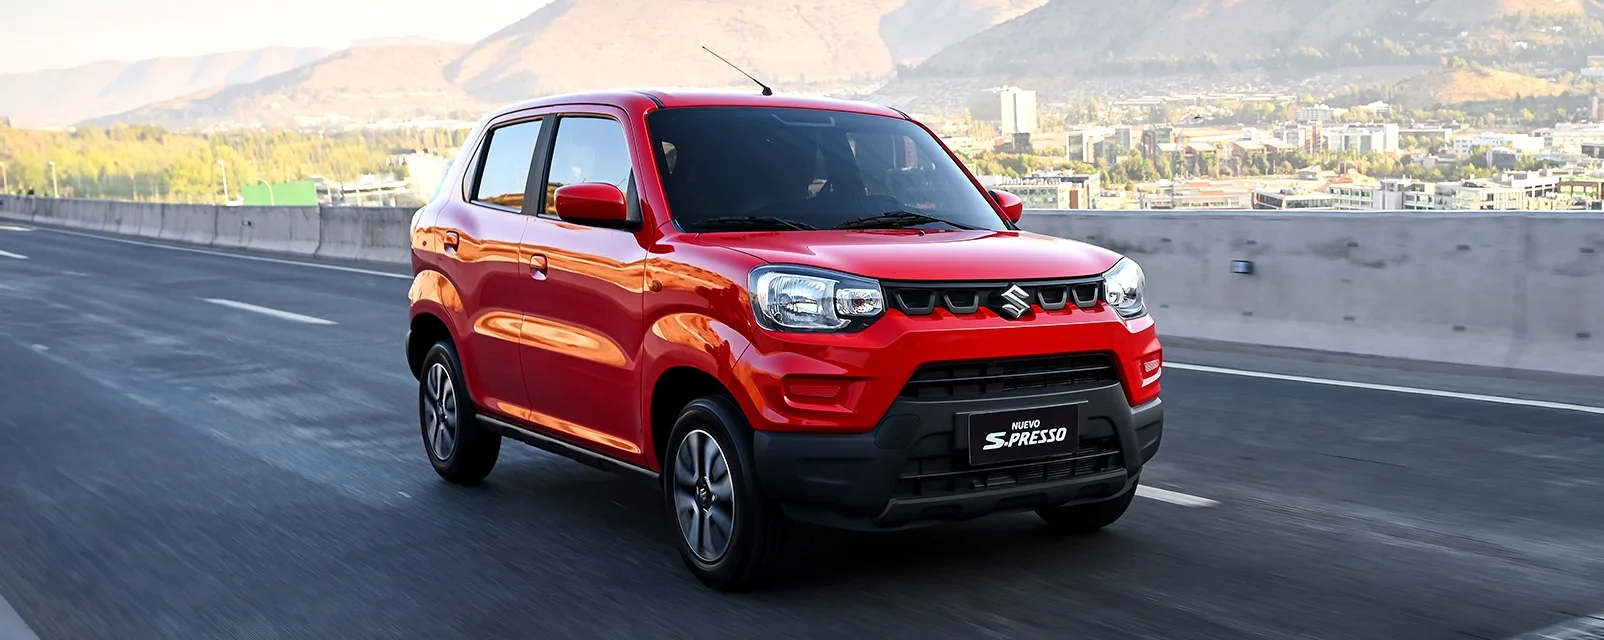 Suzuki Nuevo S-presso: el exitoso city SUV se renueva